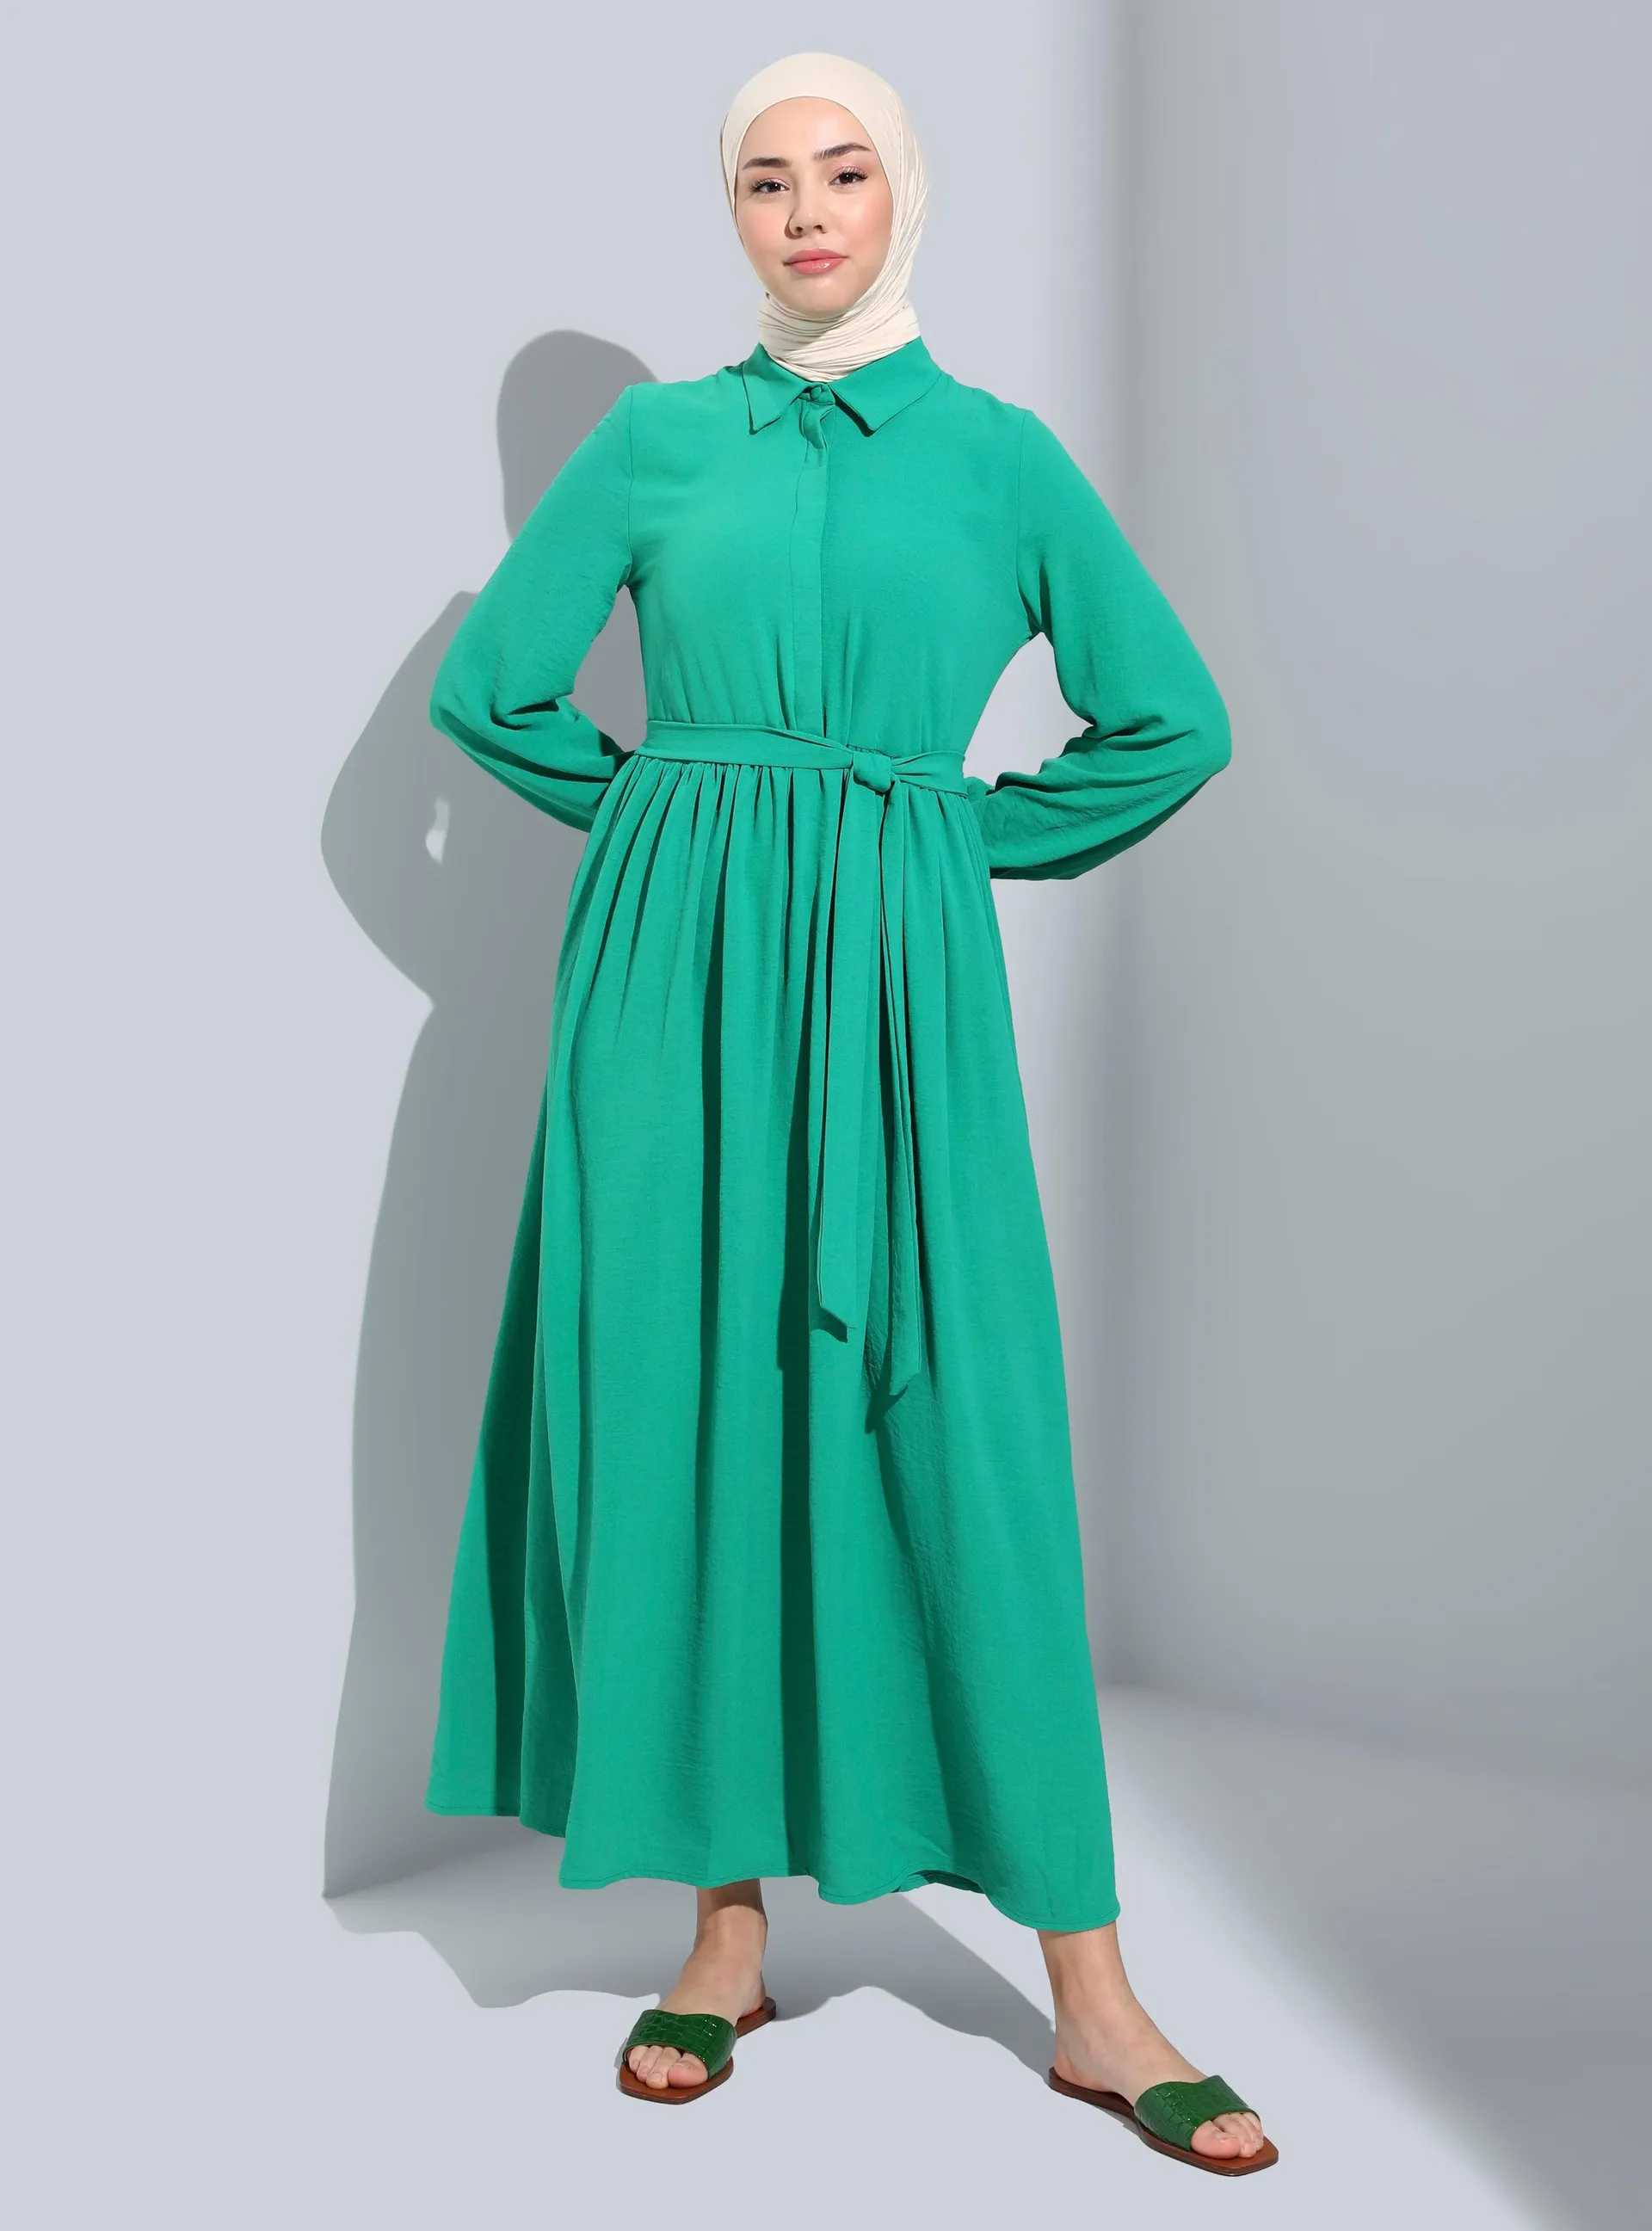 Meadow Green - Point Collar - Unlined - Modest Dress